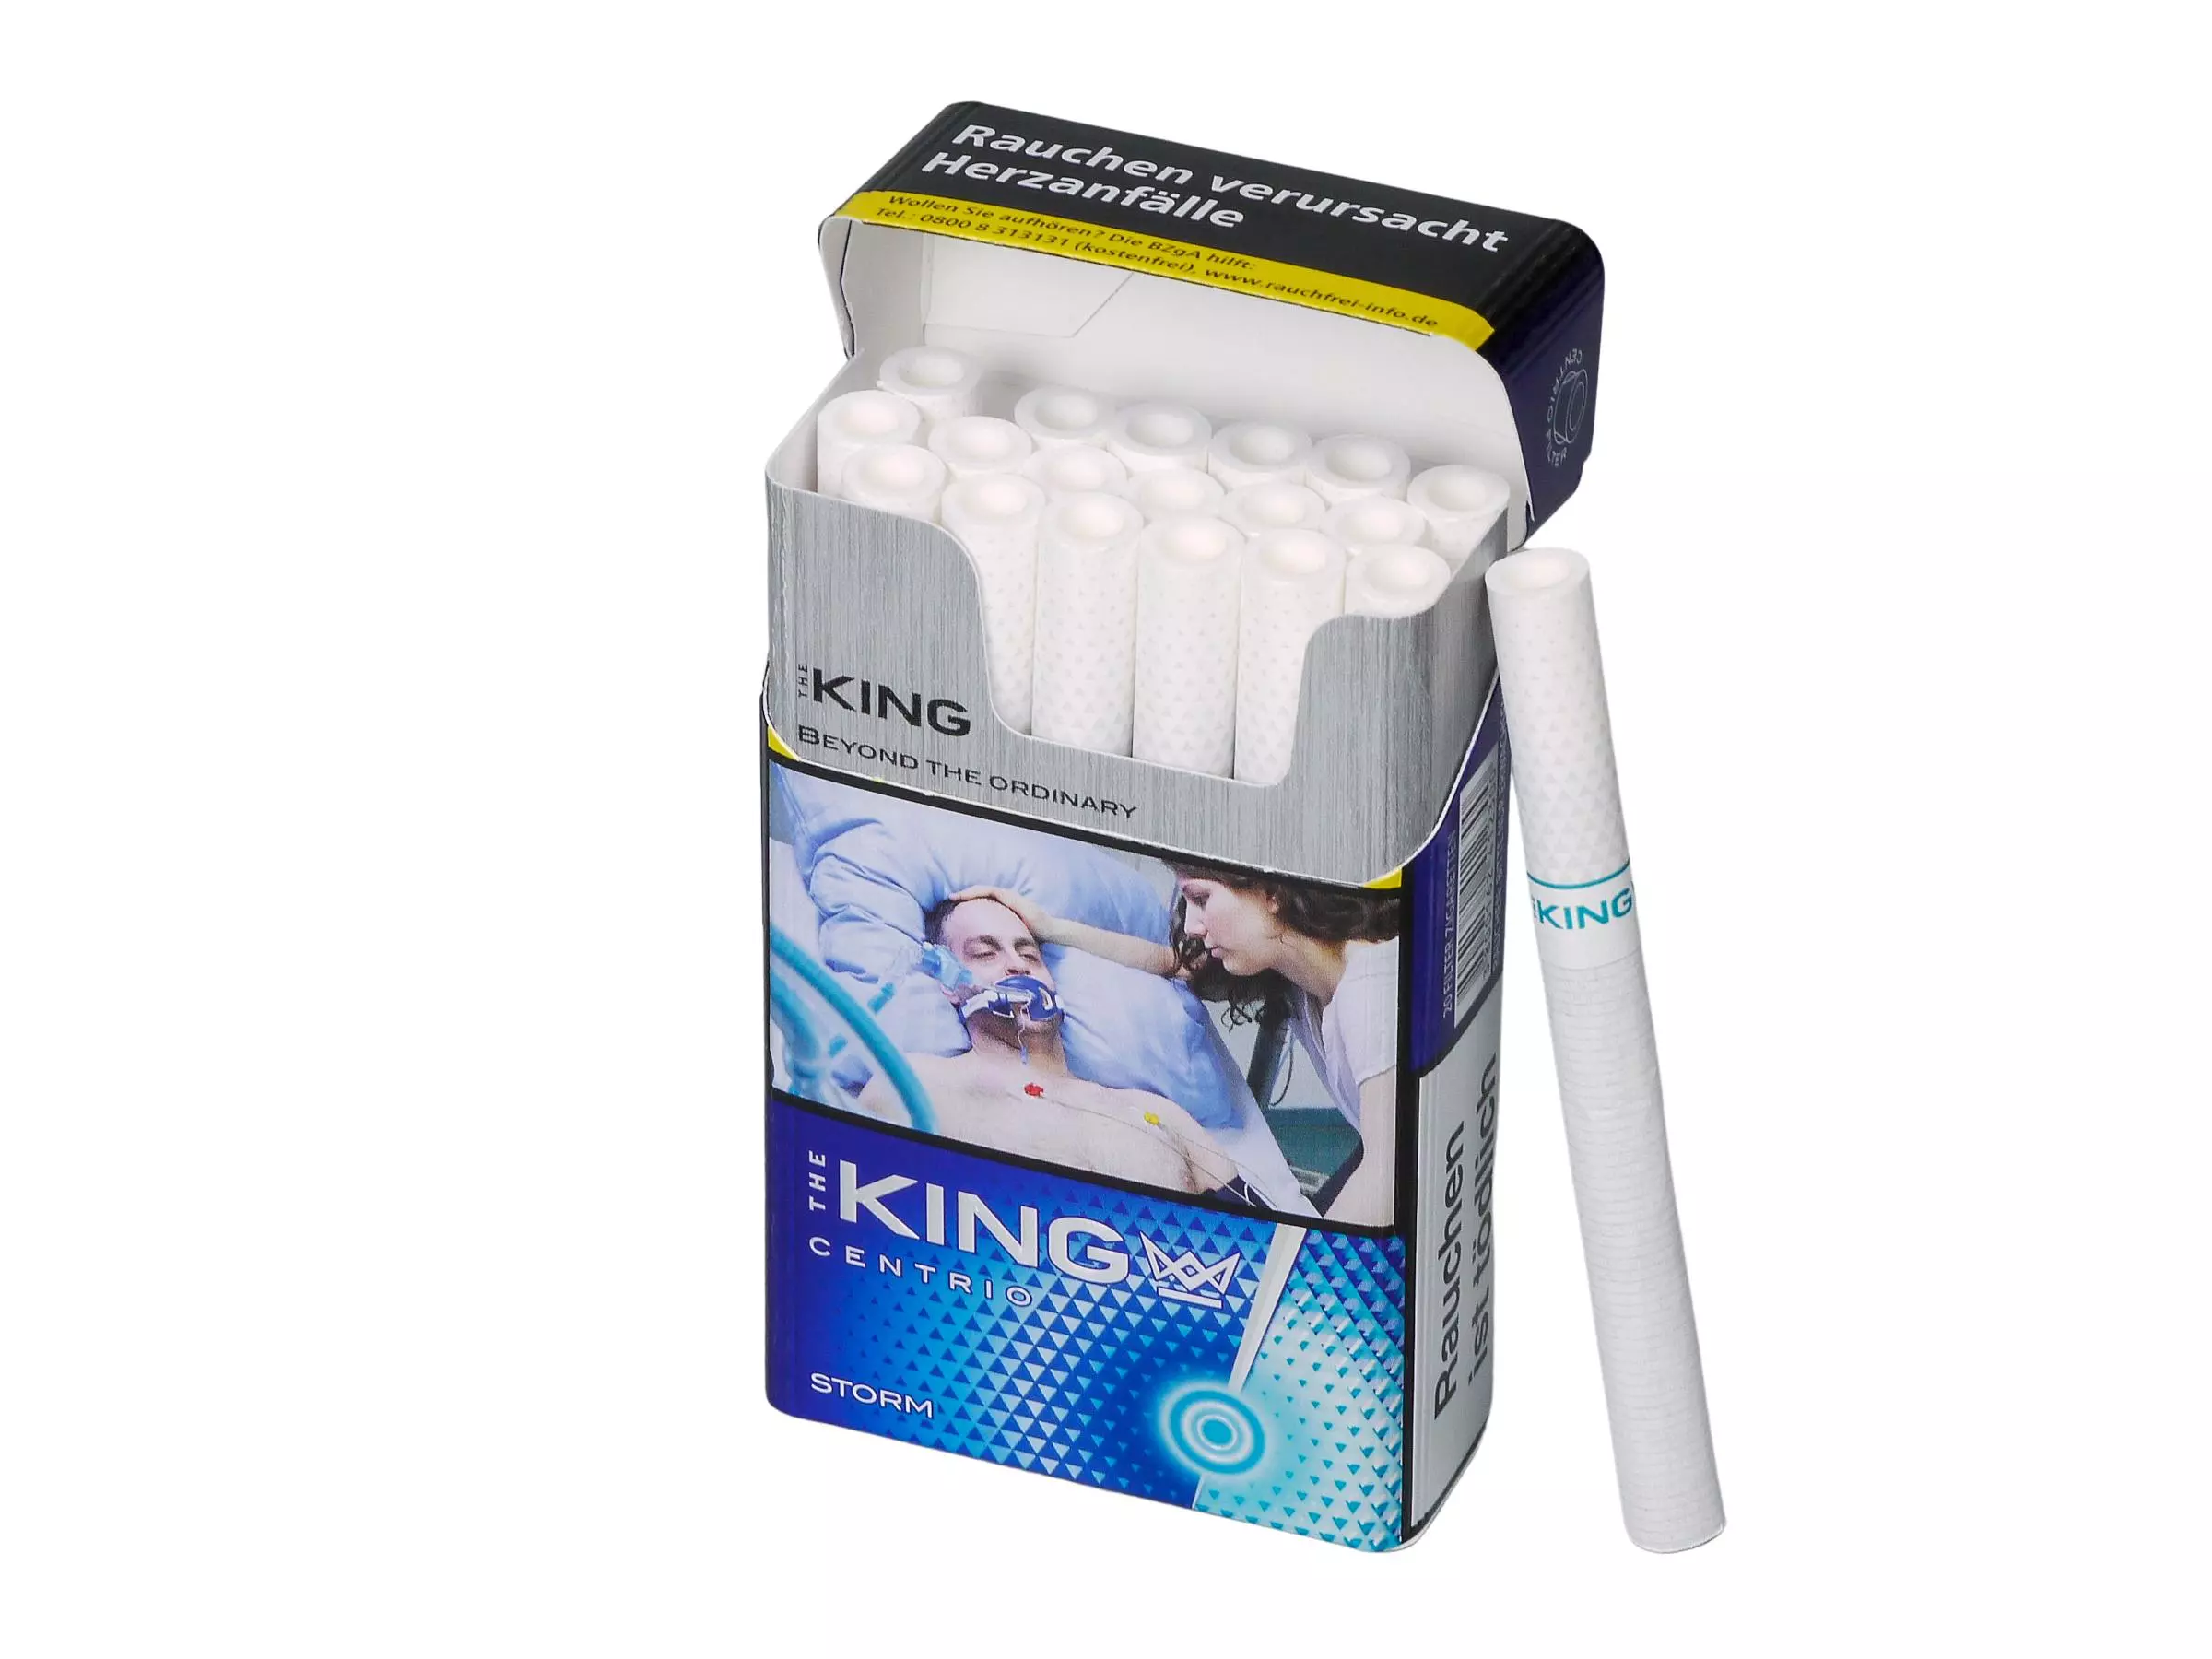 The King Centrio Storm 10 x 20 Zigaretten